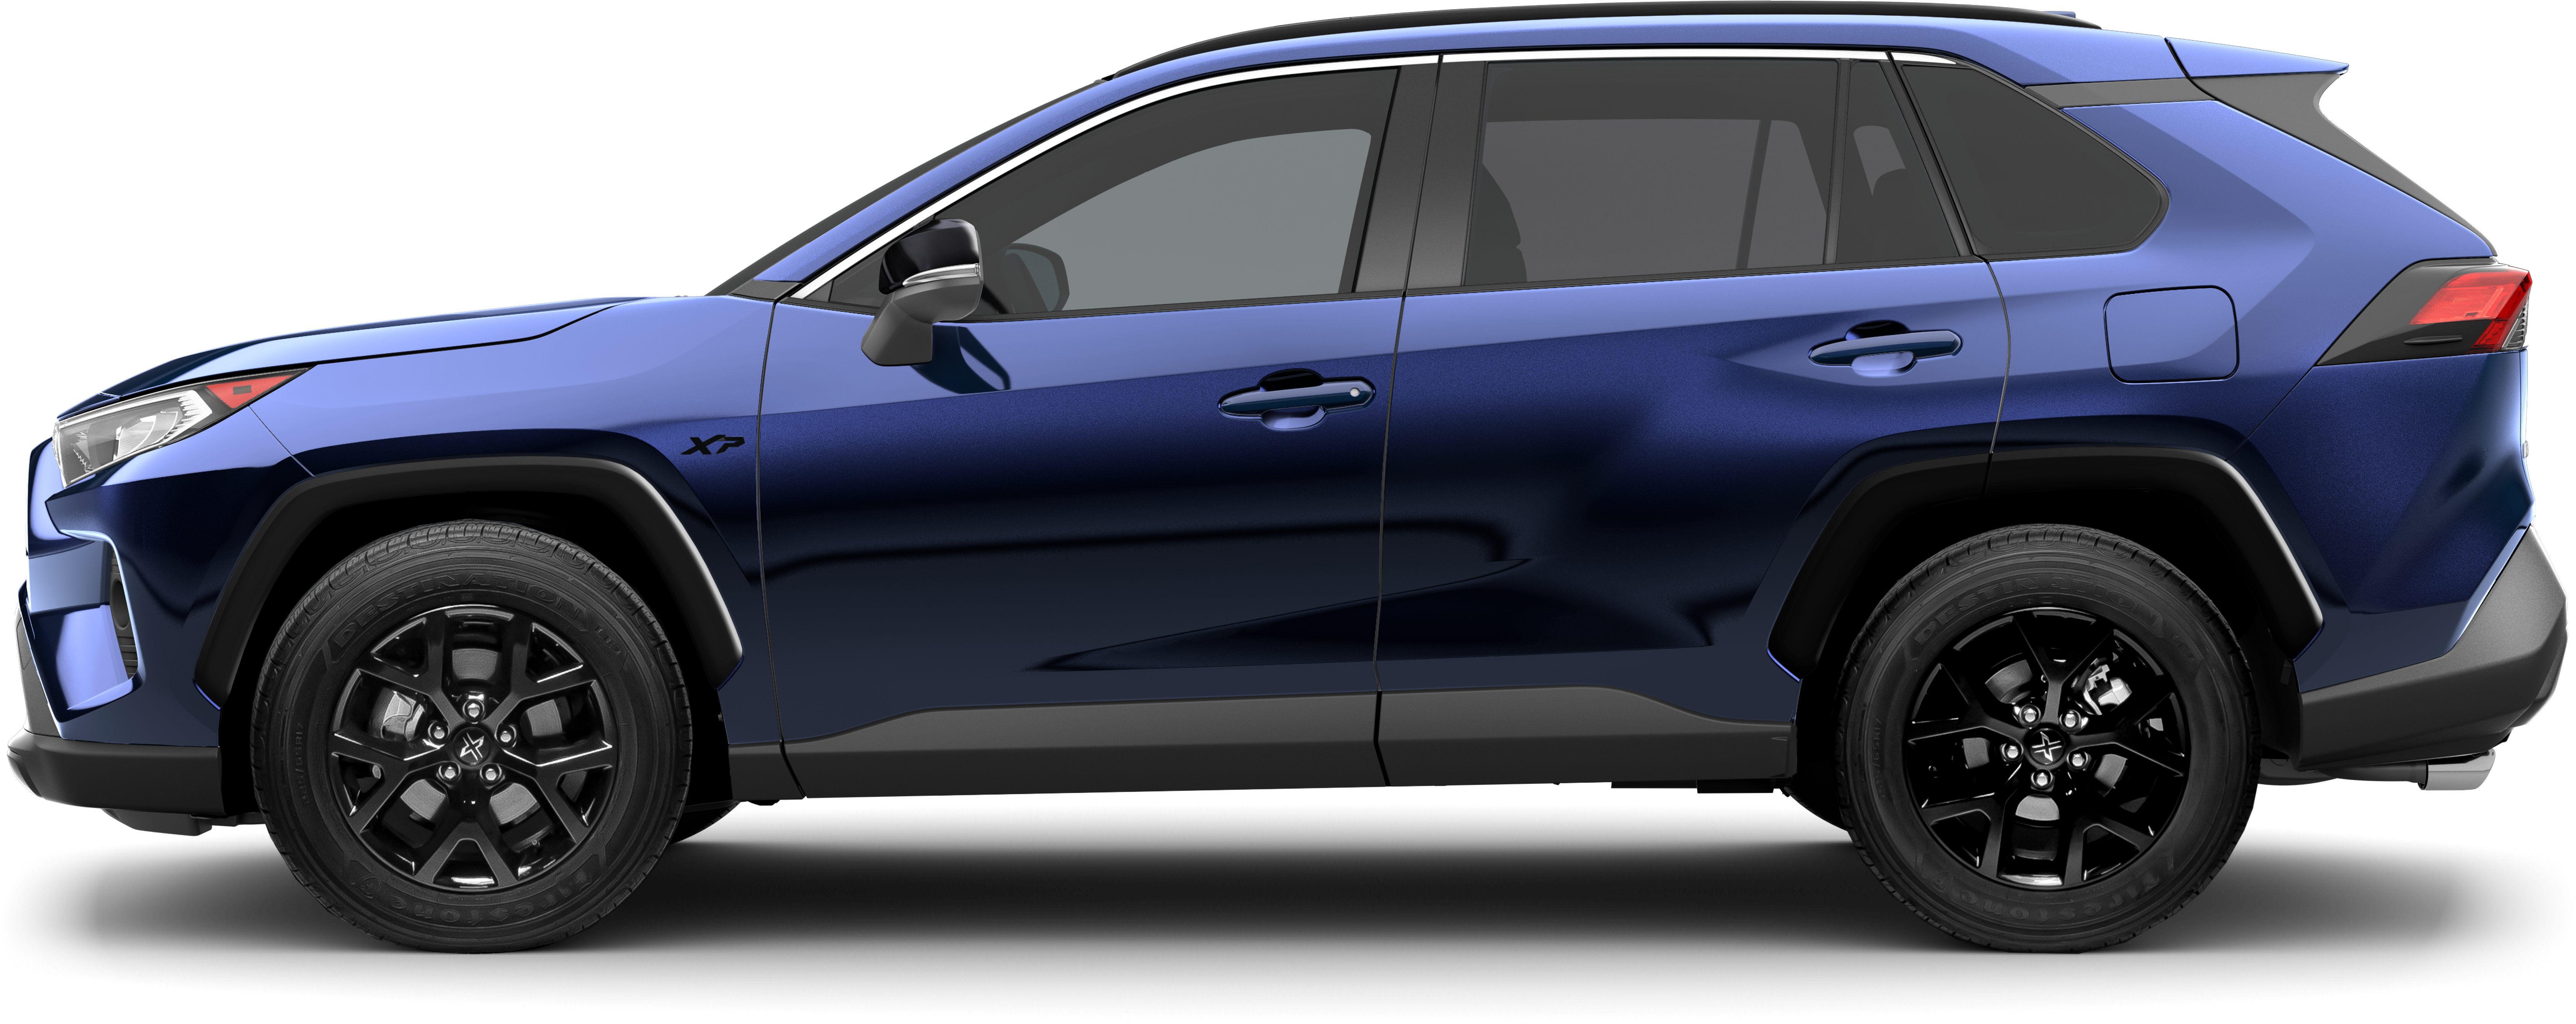 exterior shot of blue Toyota RAV4 XP Series